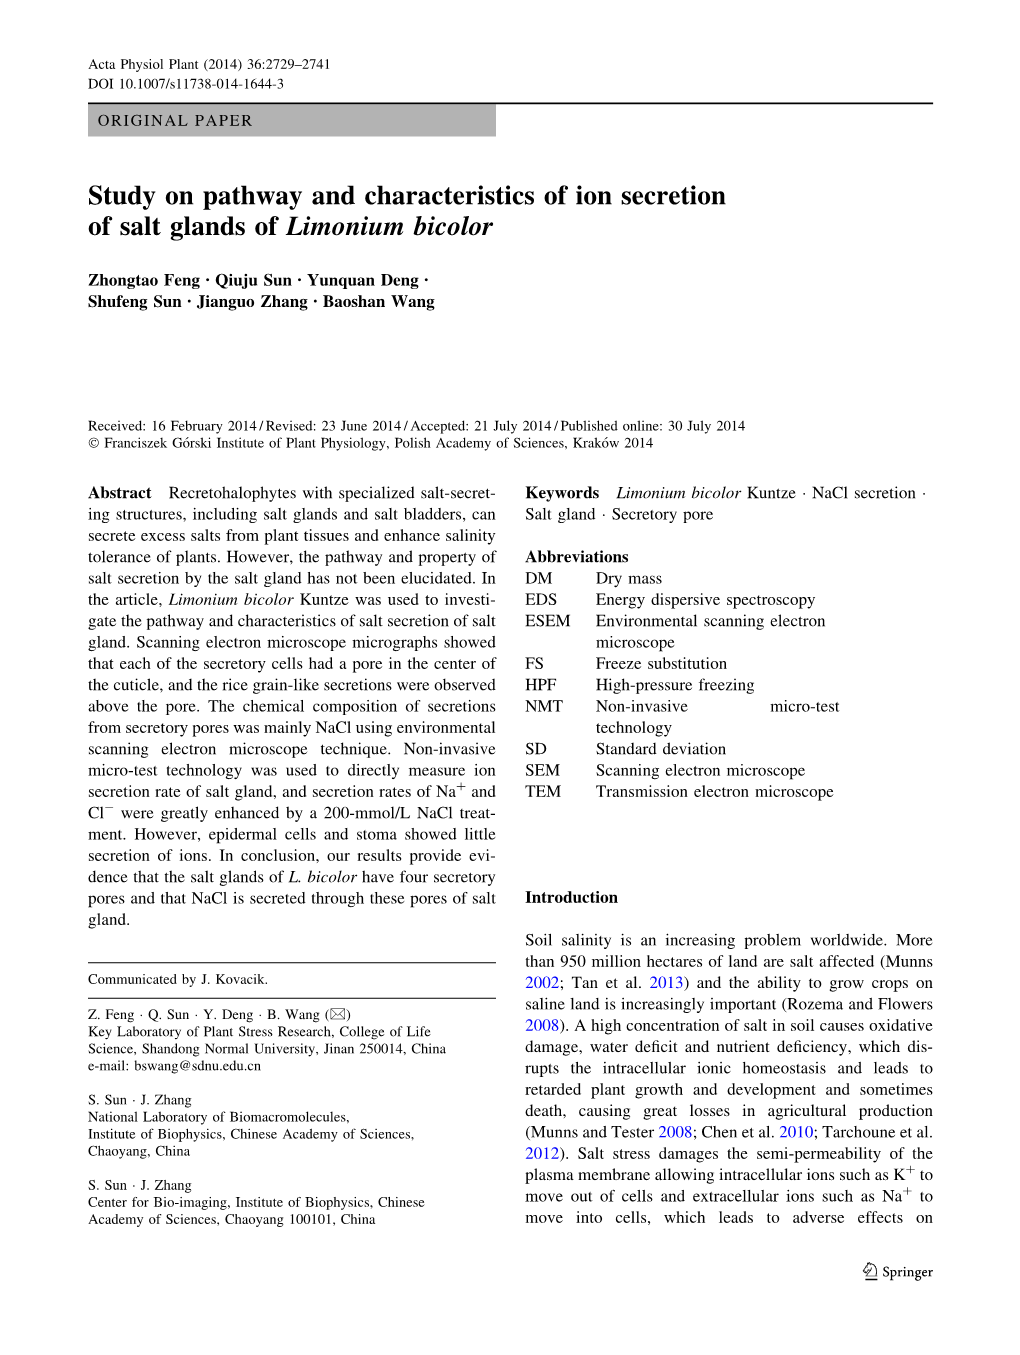 Study on Pathway and Characteristics of Ion Secretion of Salt Glands of Limonium Bicolor